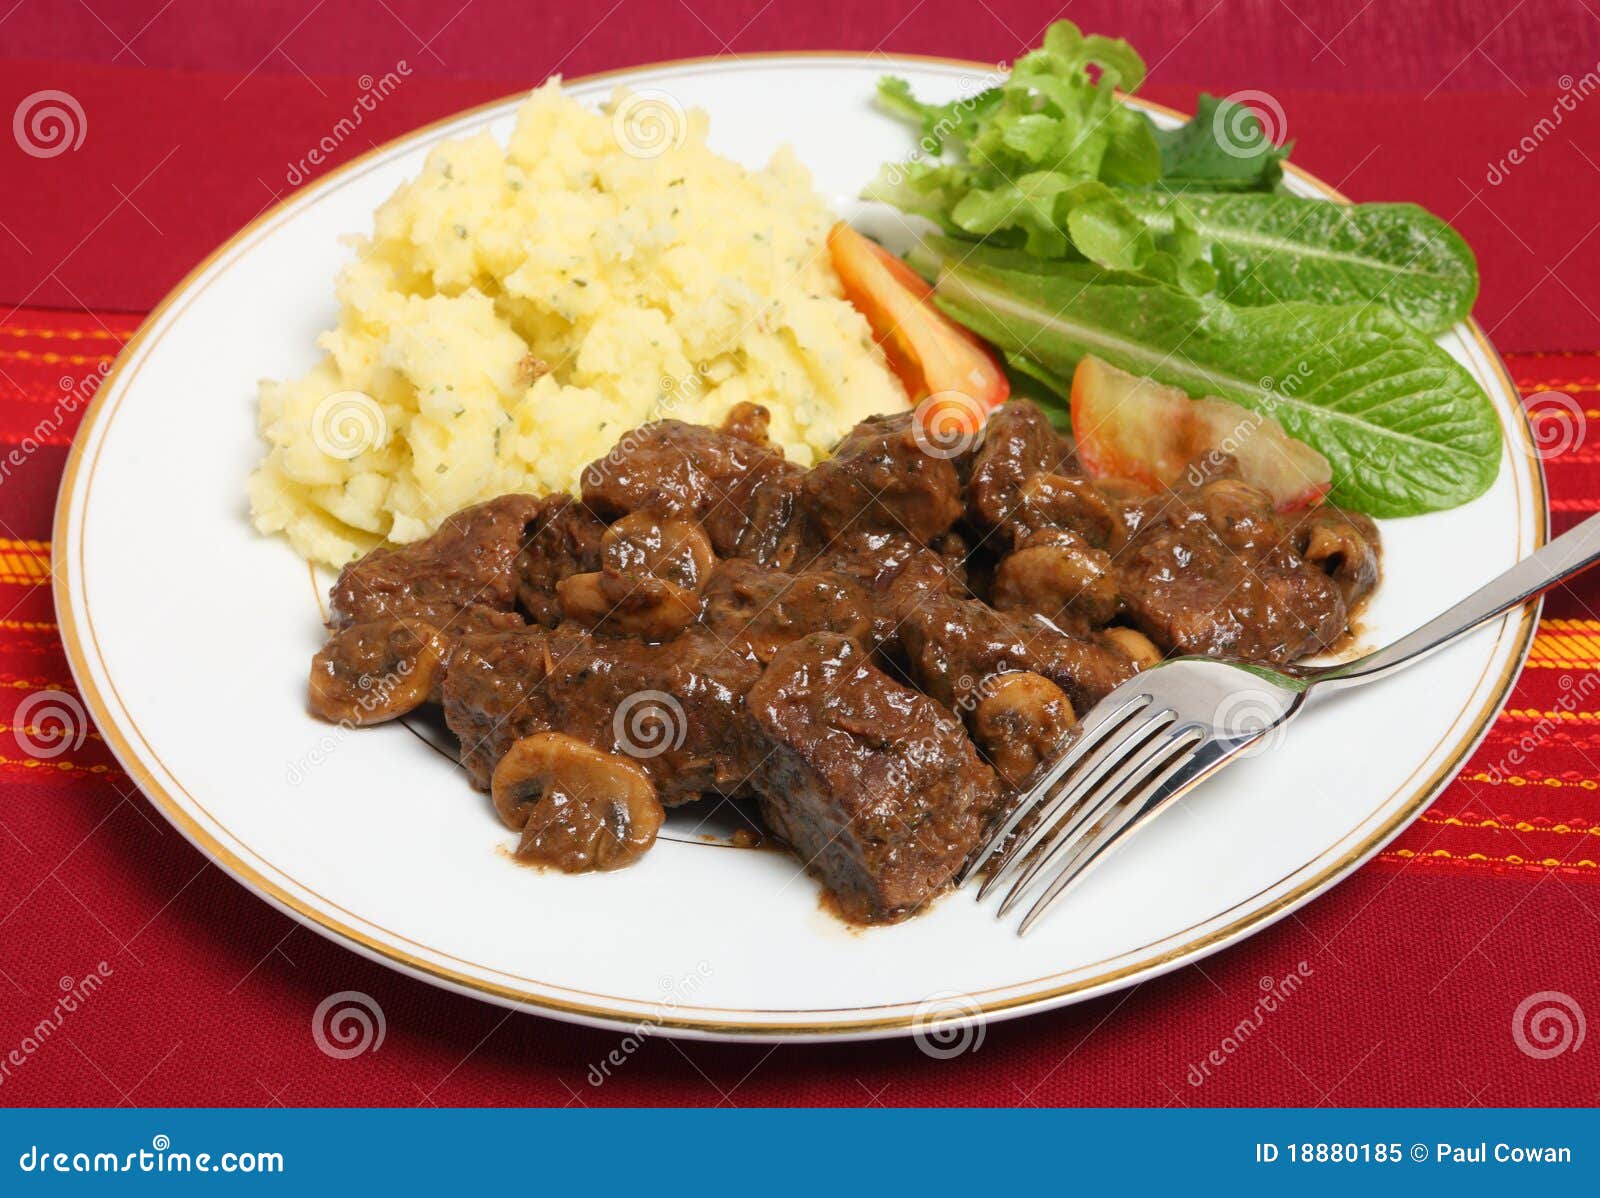 Beef Bourguignon dinner stock image. Image of mushroom - 18880185